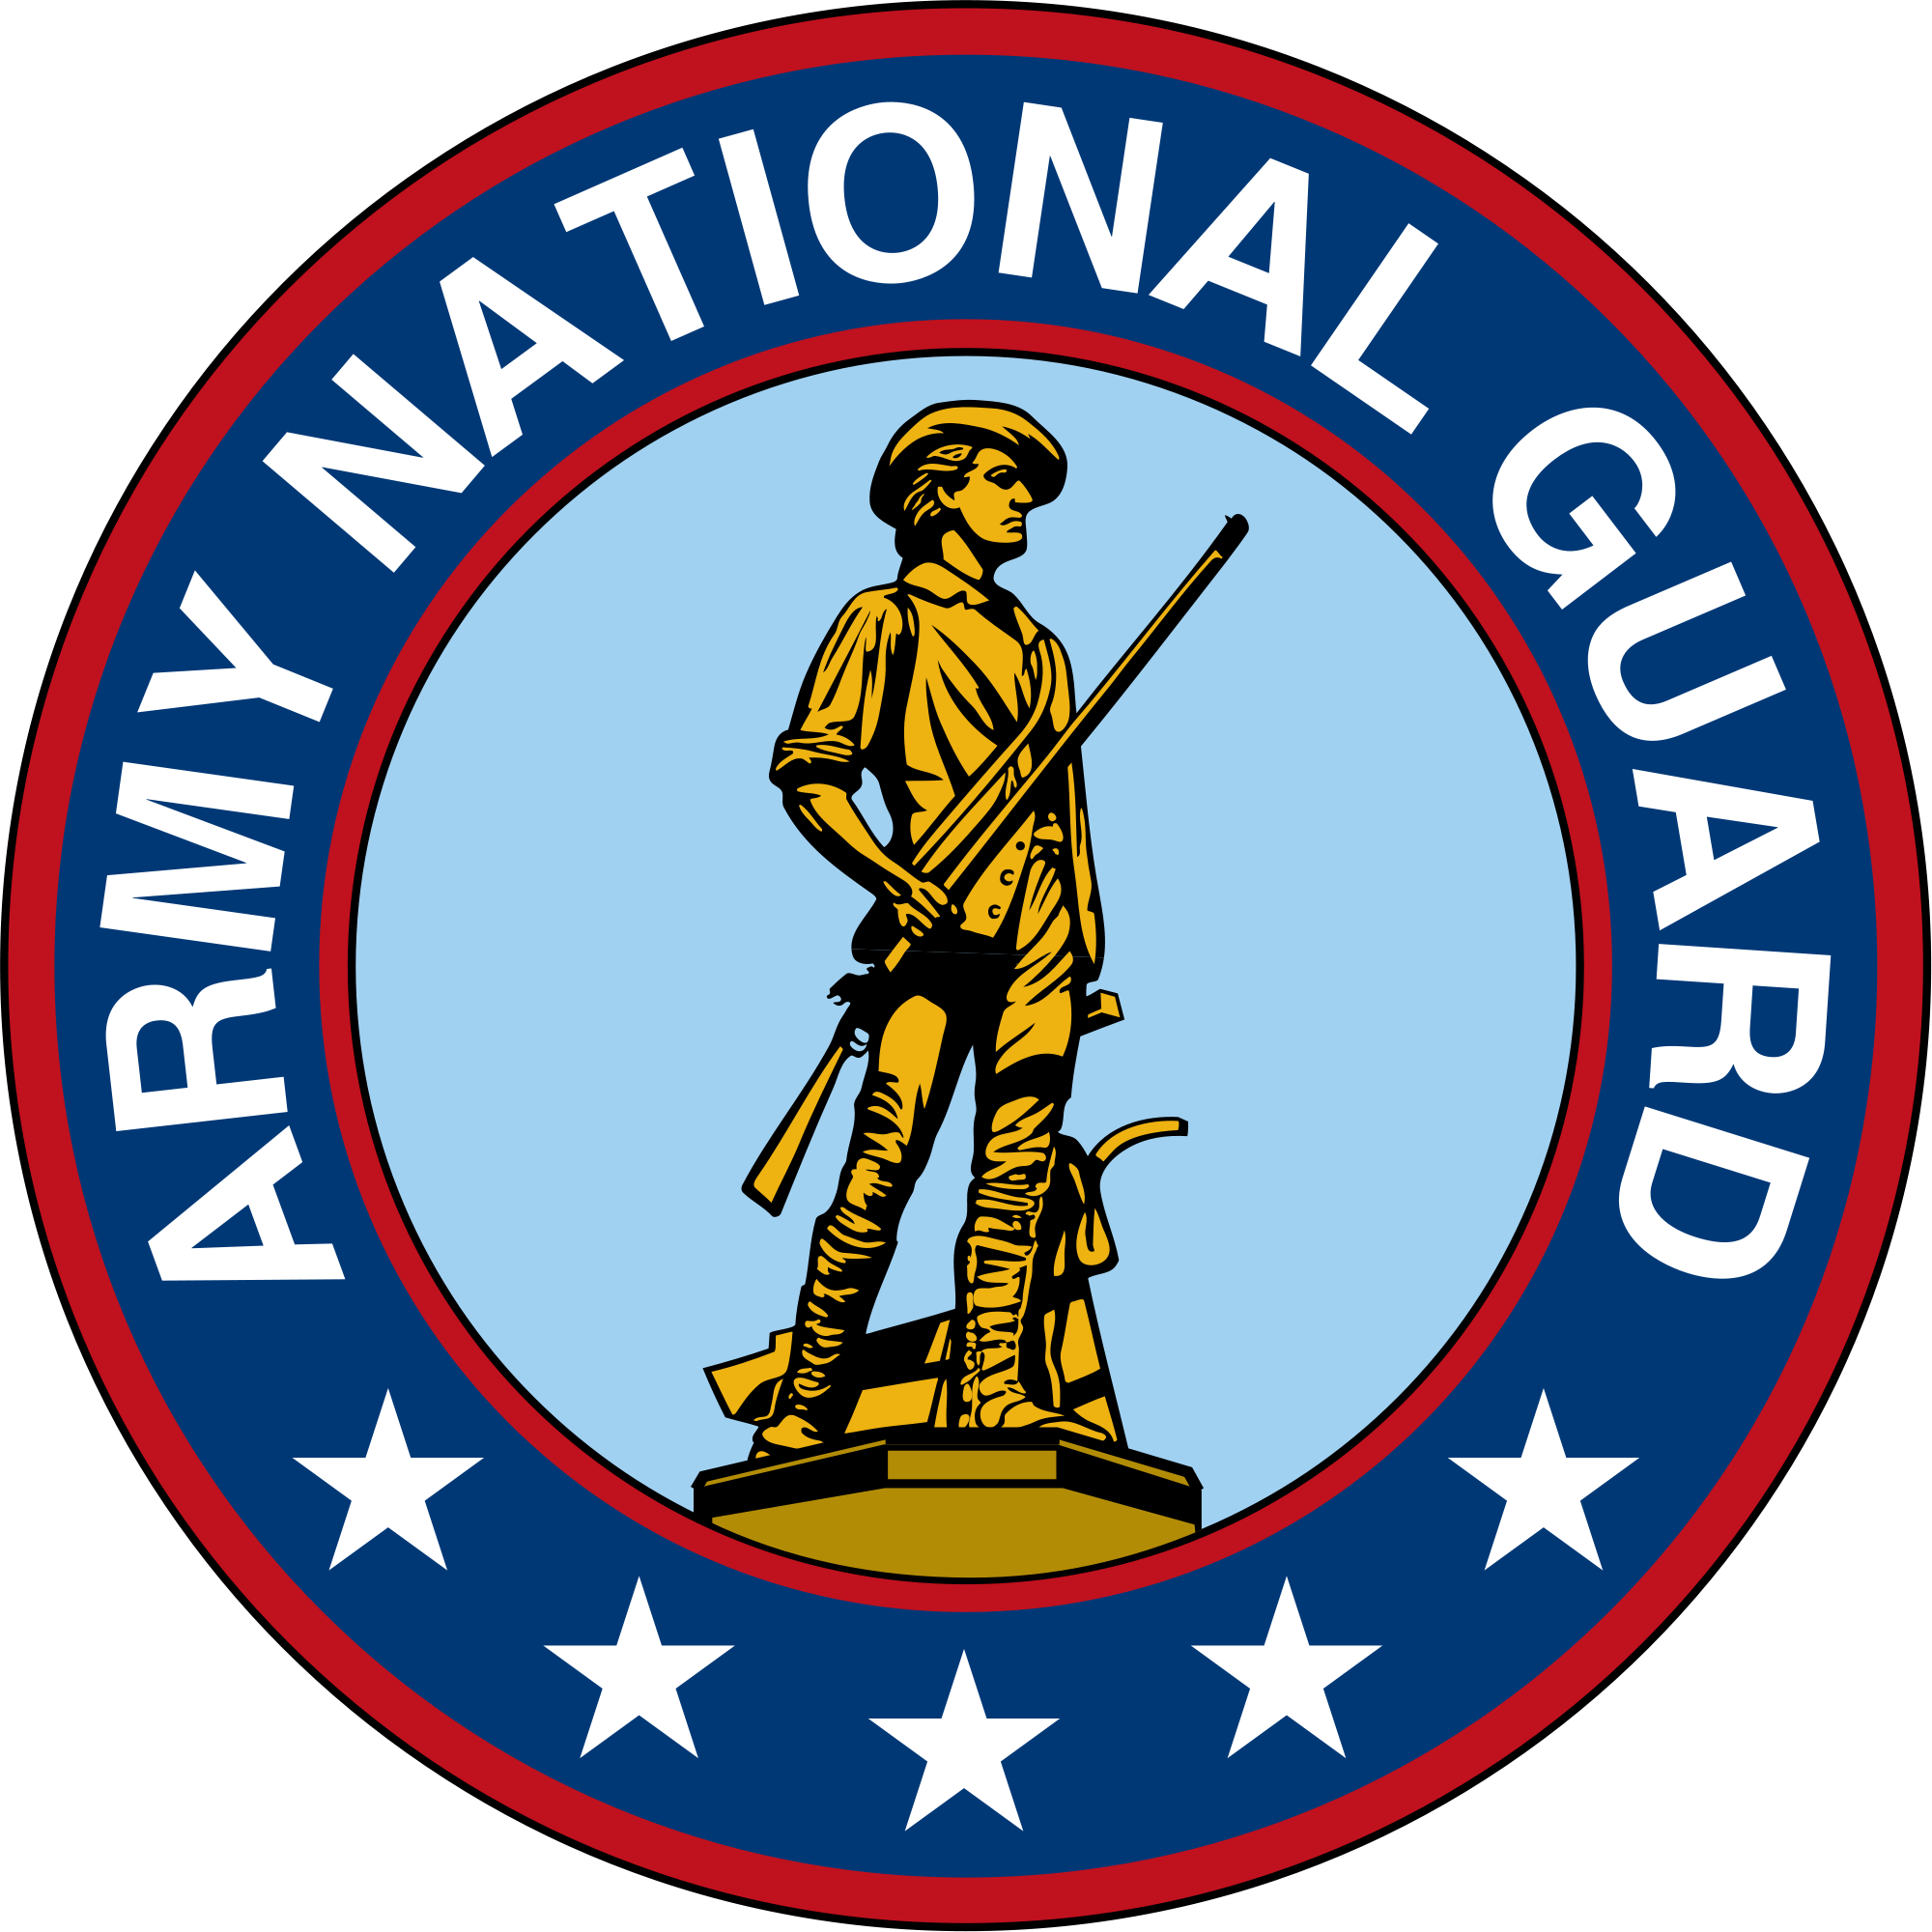 Army National Guard - Wikipedia, the free encyclopedia